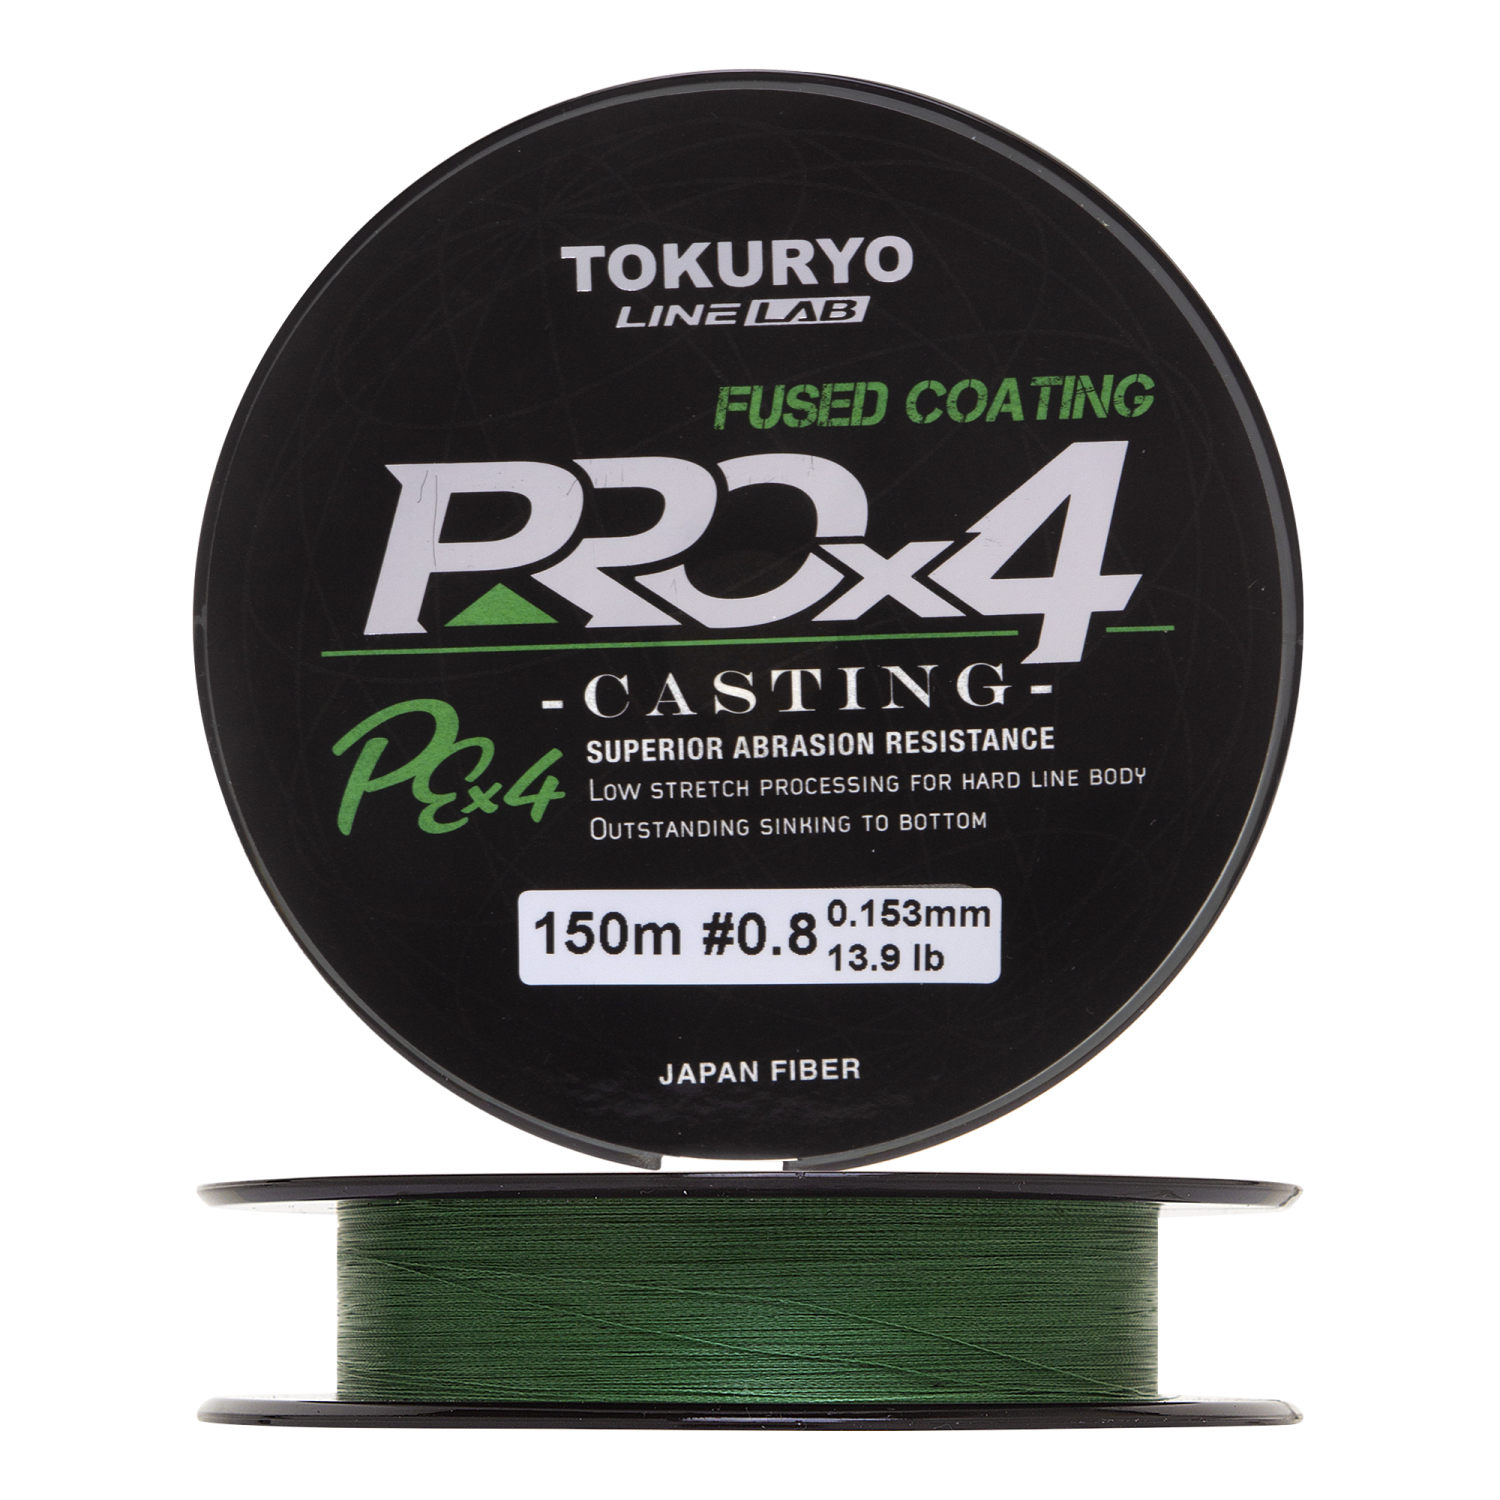 шнур tokuryo pro pe x4 casting 150м dark green 1 0 0 171мм 16 1lb Шнур плетеный Tokuryo Pro PE X4 #0,8 0,153мм 150м (dark green)